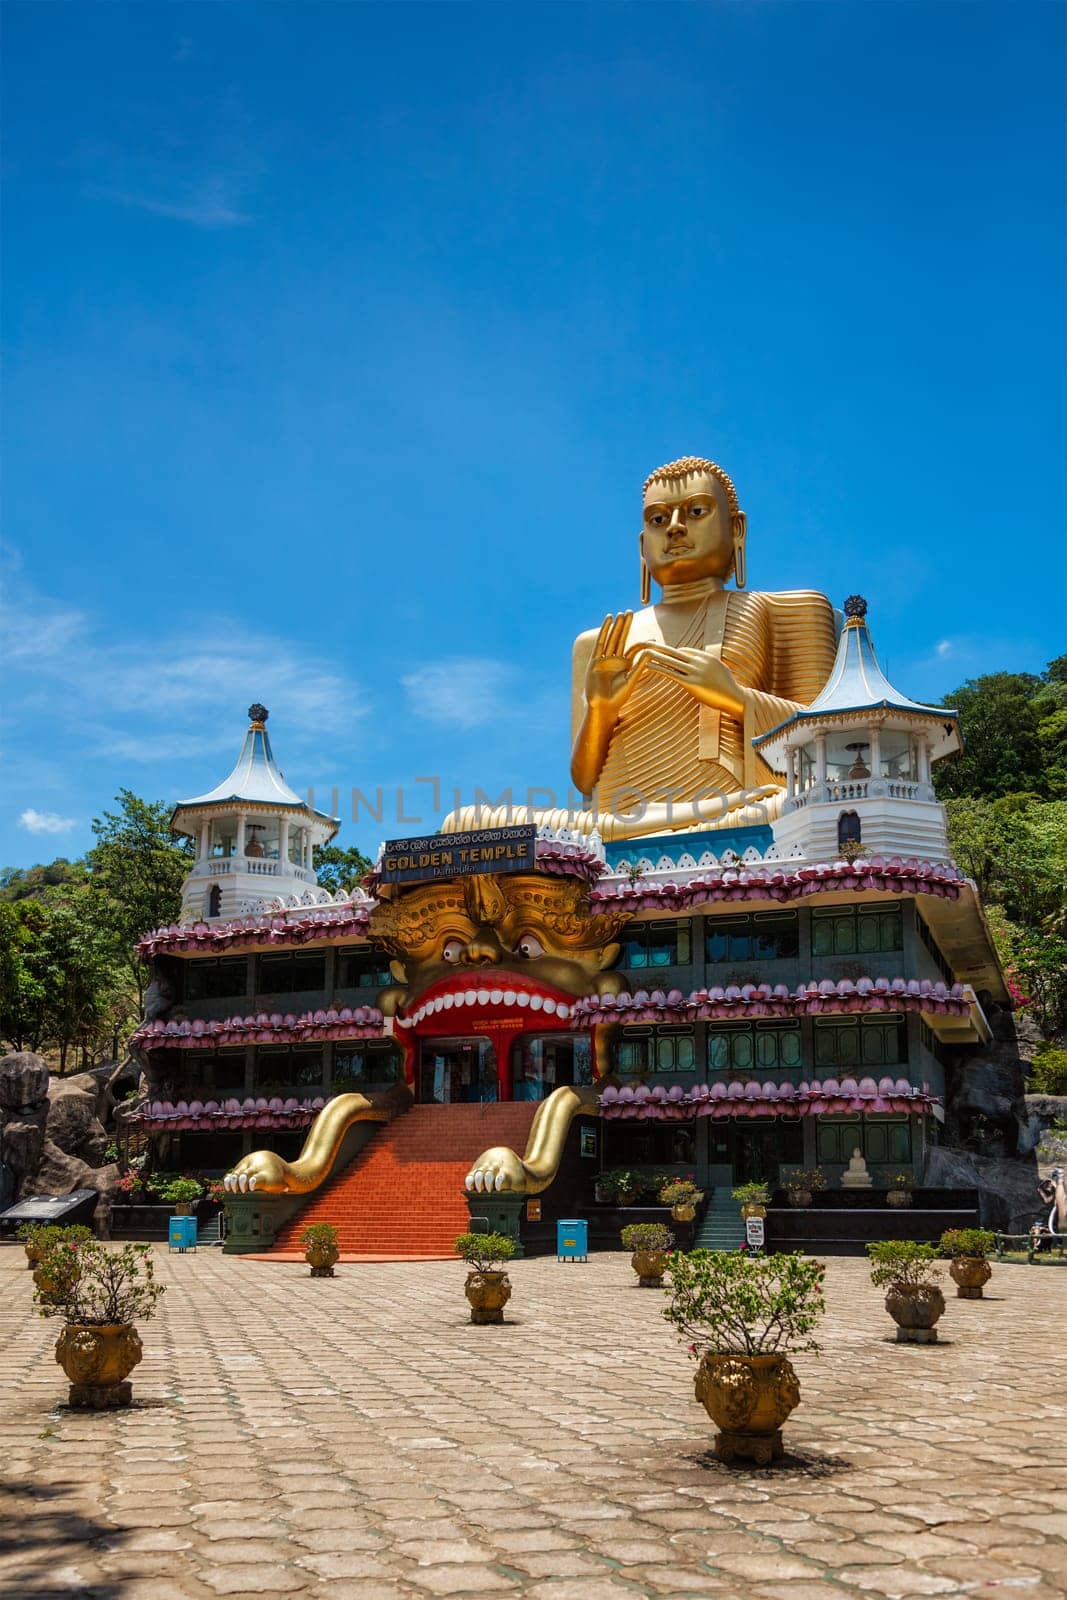 Golden Buddha temple with gold Buddha on roof, Dambulla, Sri Lanka by dimol